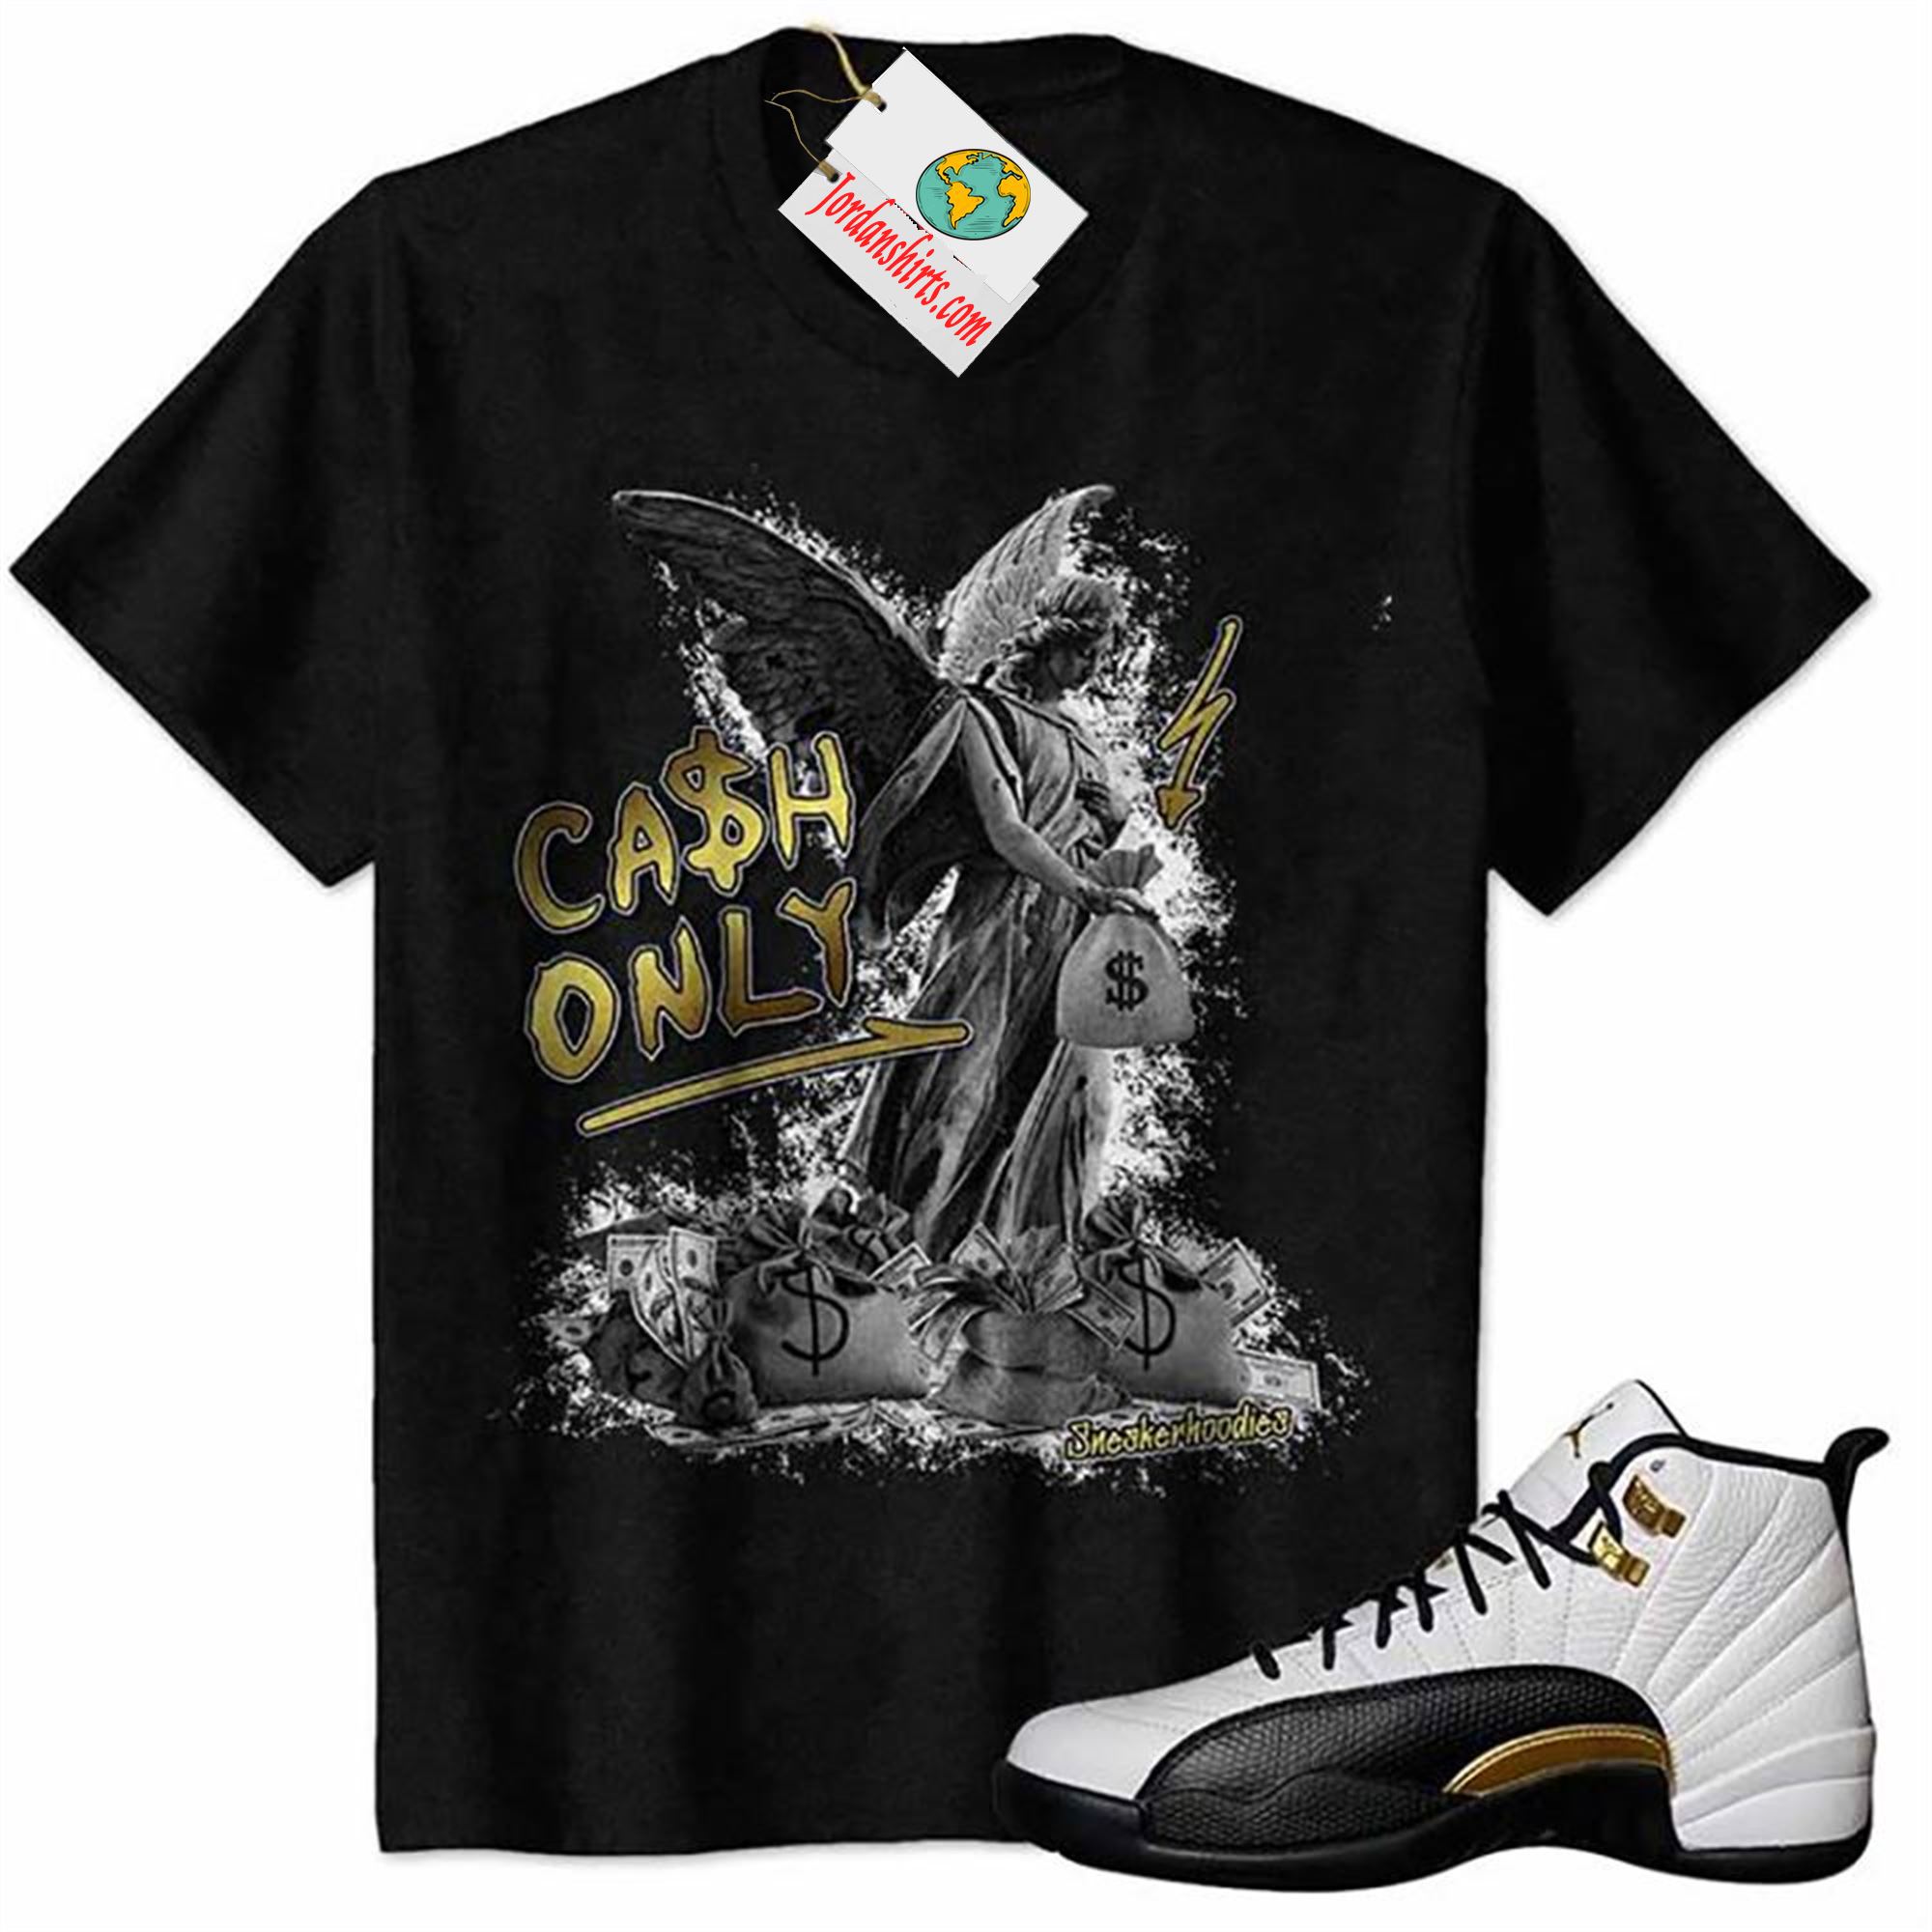 Jordan 12 Shirt, Cash Only Angel Dollar Money Bag Black Air Jordan 12 Royalty 12s Full Size Up To 5xl